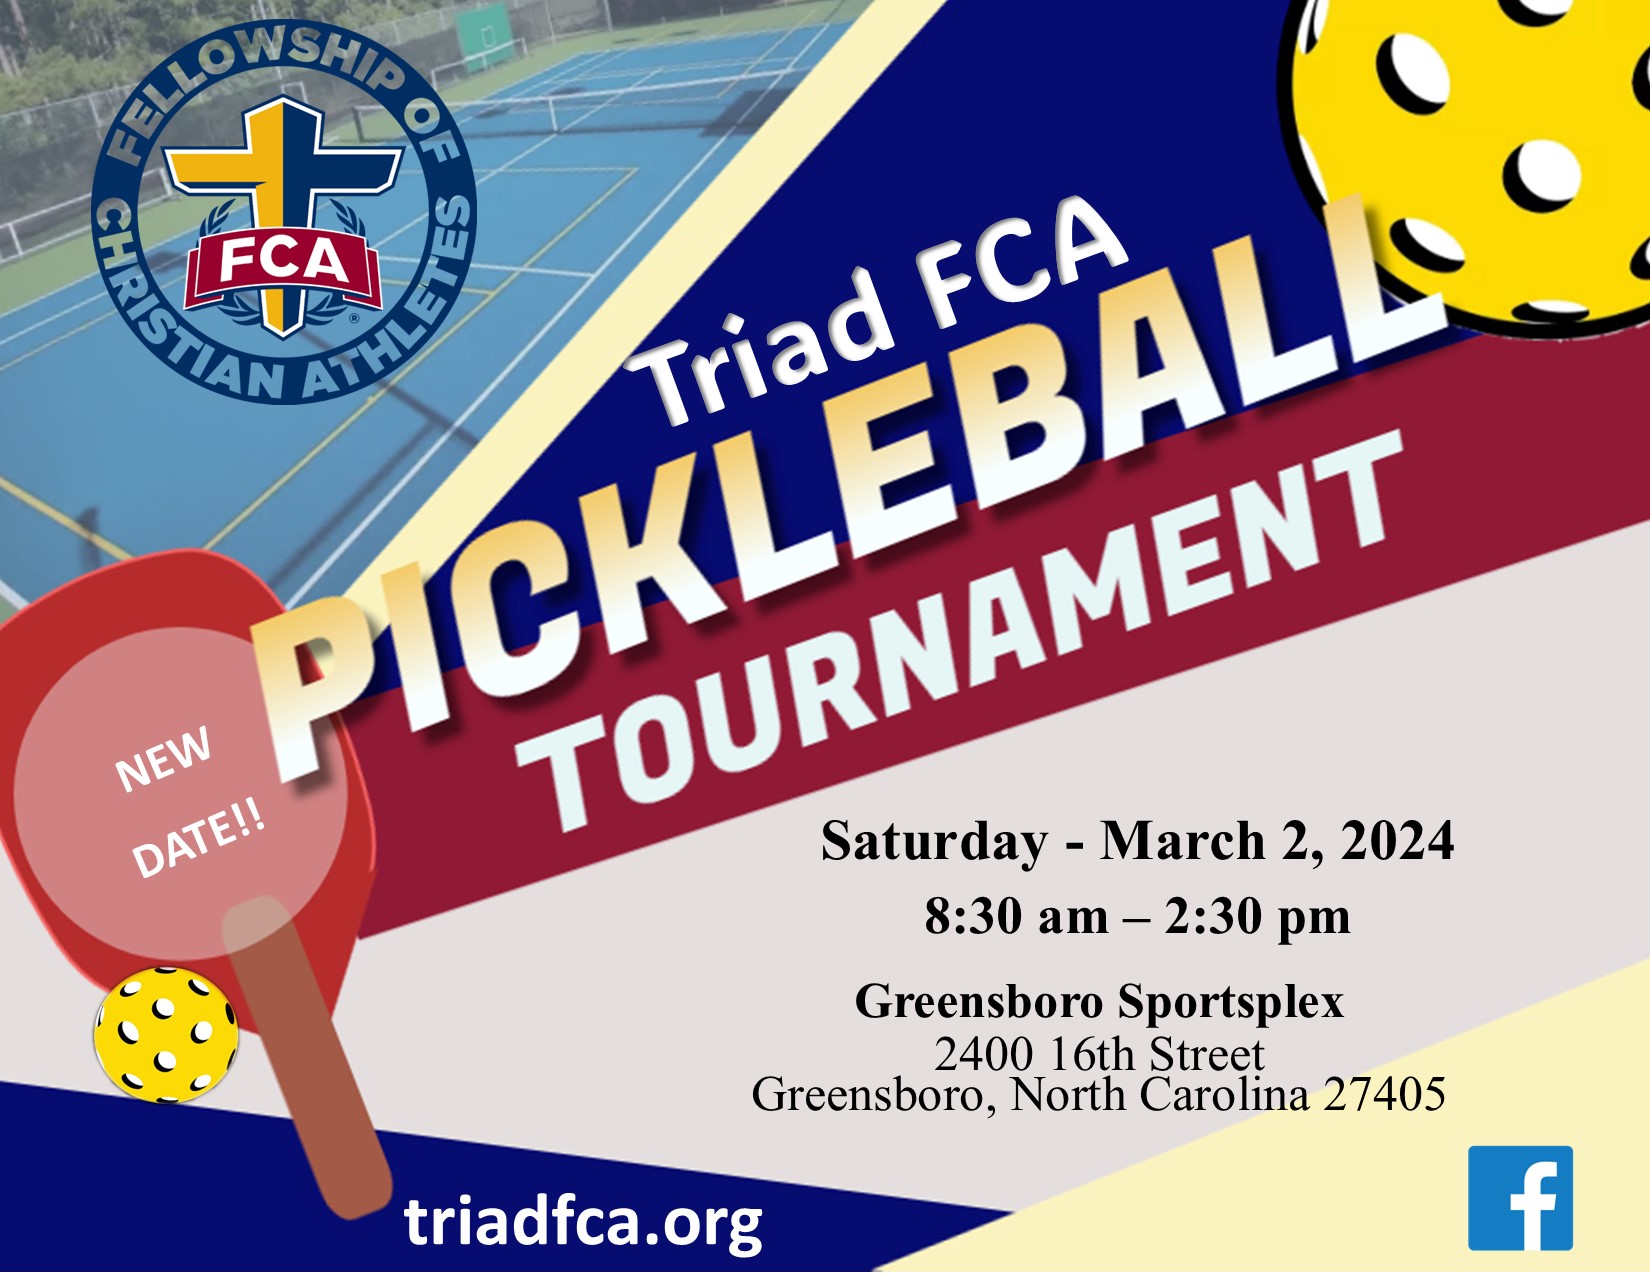 Triad FCA Pickleball Tournament – TRIAD FCA